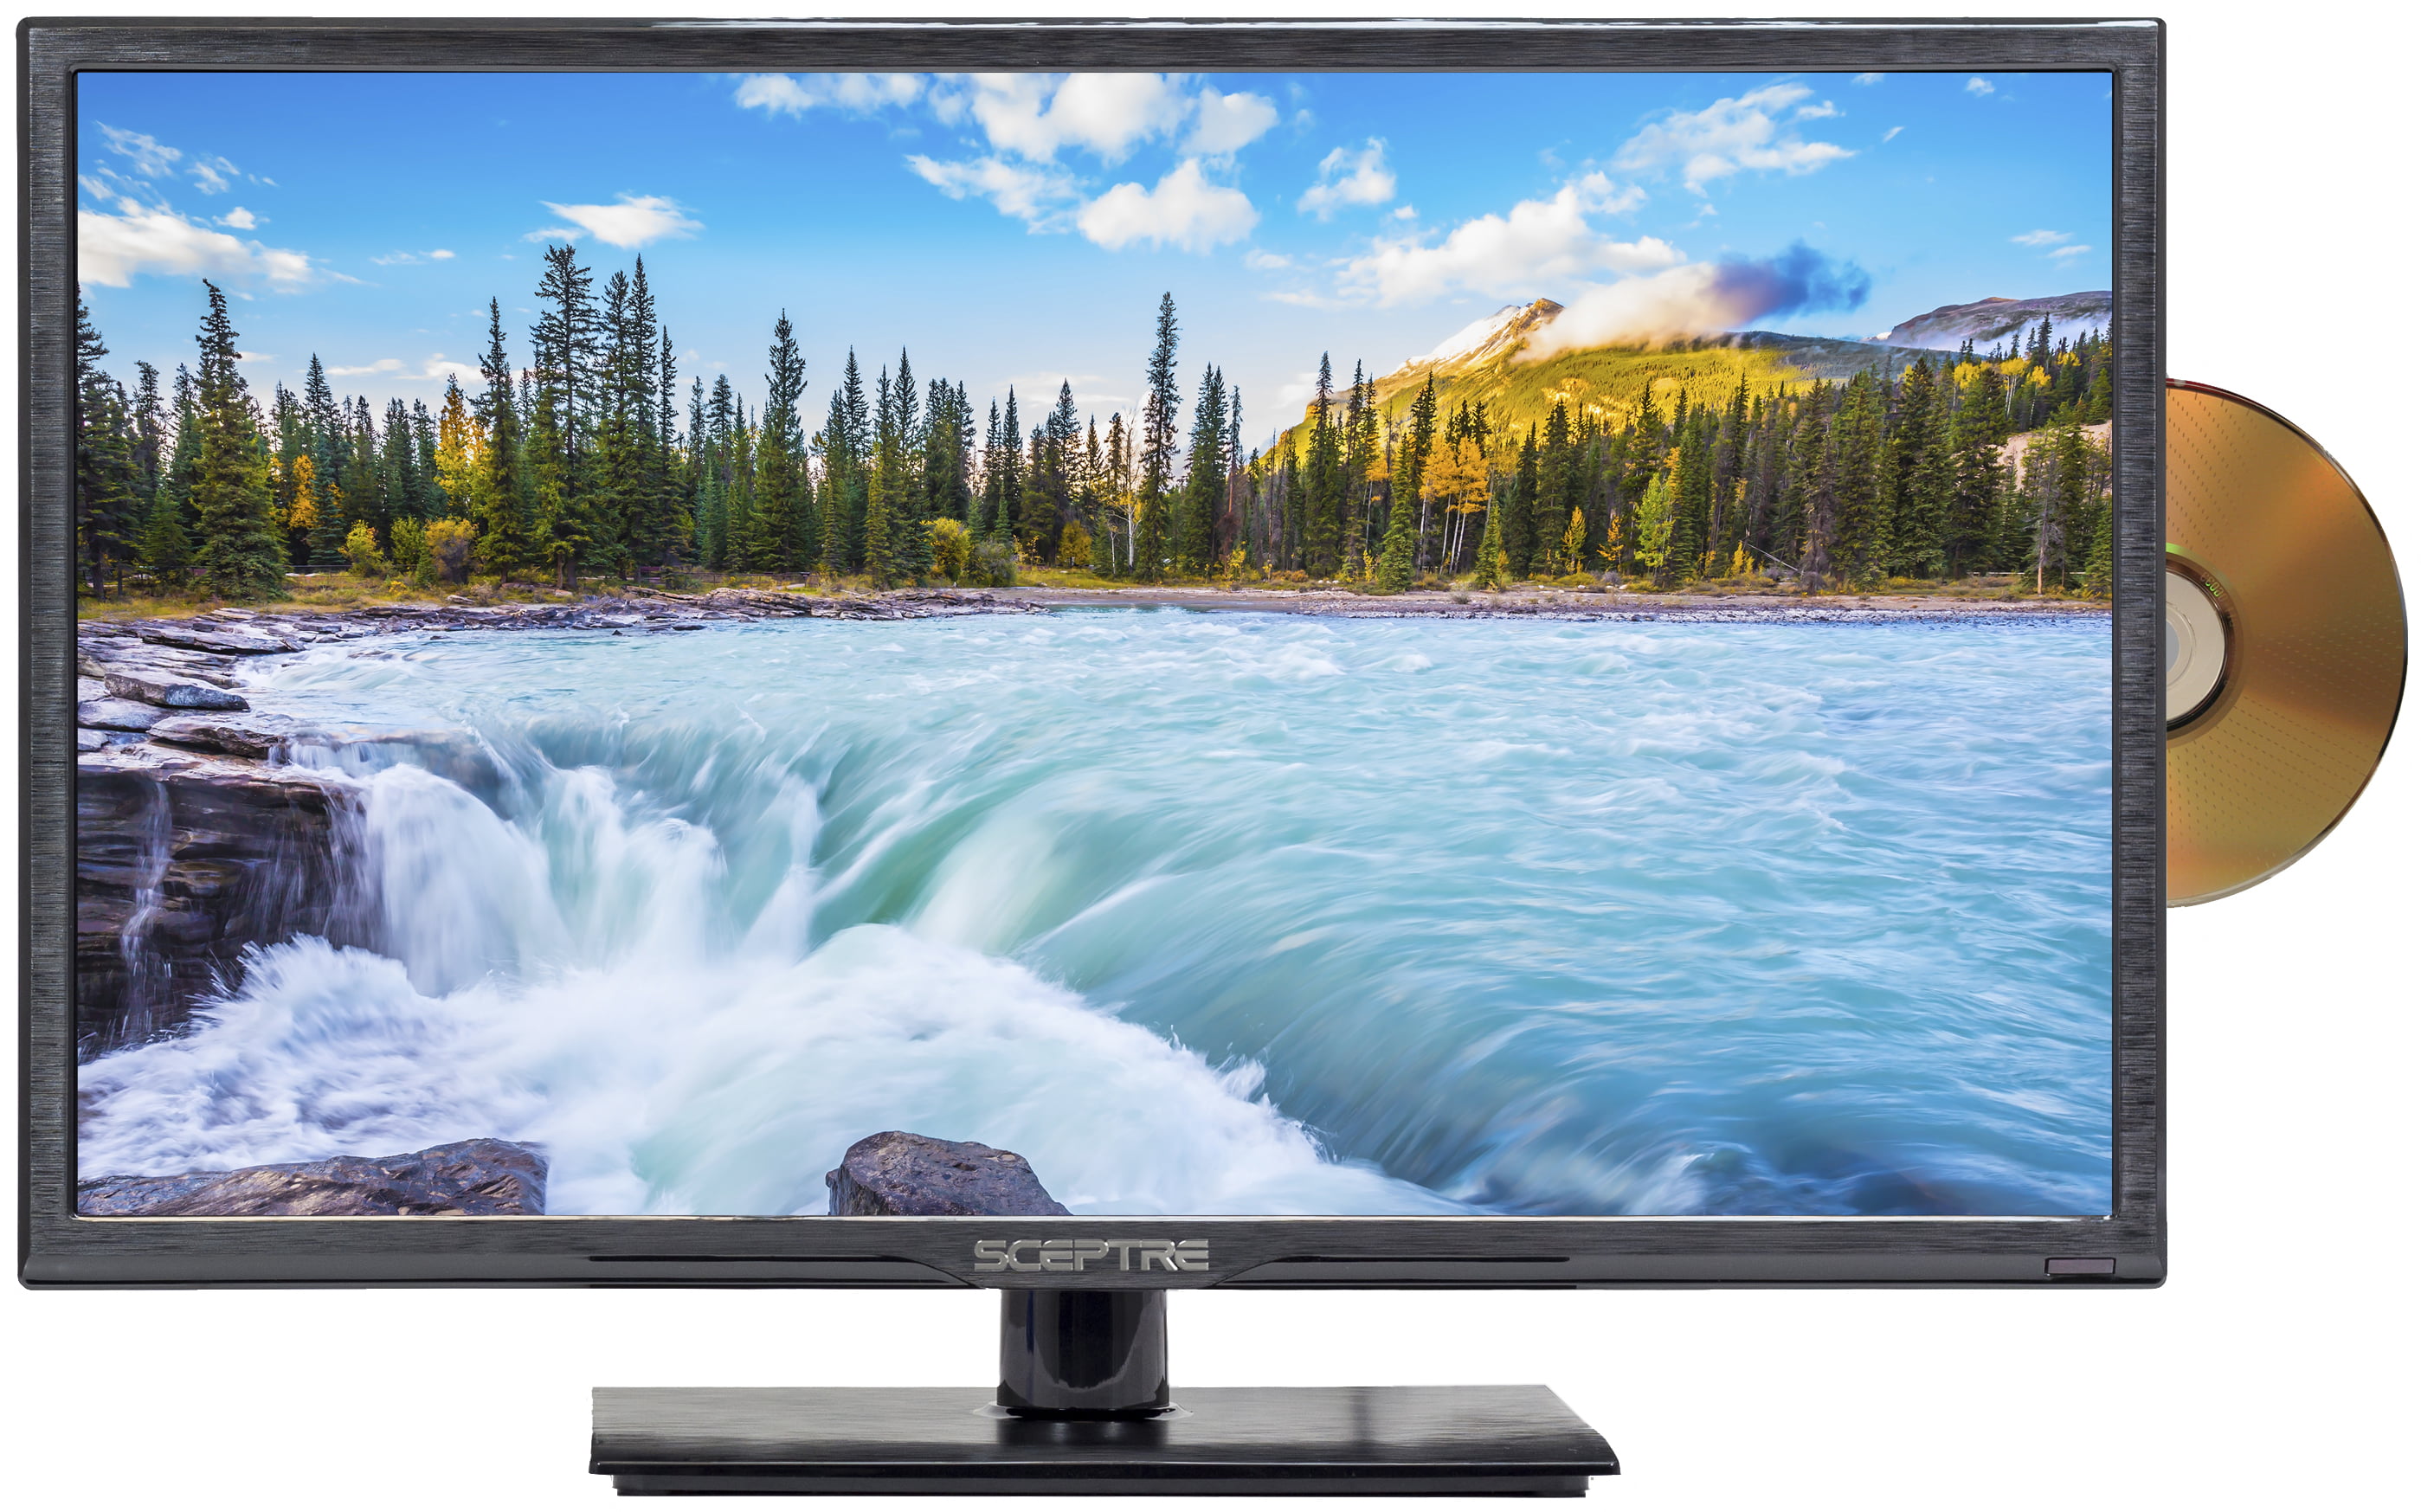 Sceptre 24 Class 1080p Fhd Led Tv With Built In Dvd Player E246bd F Walmart Com Walmart Com